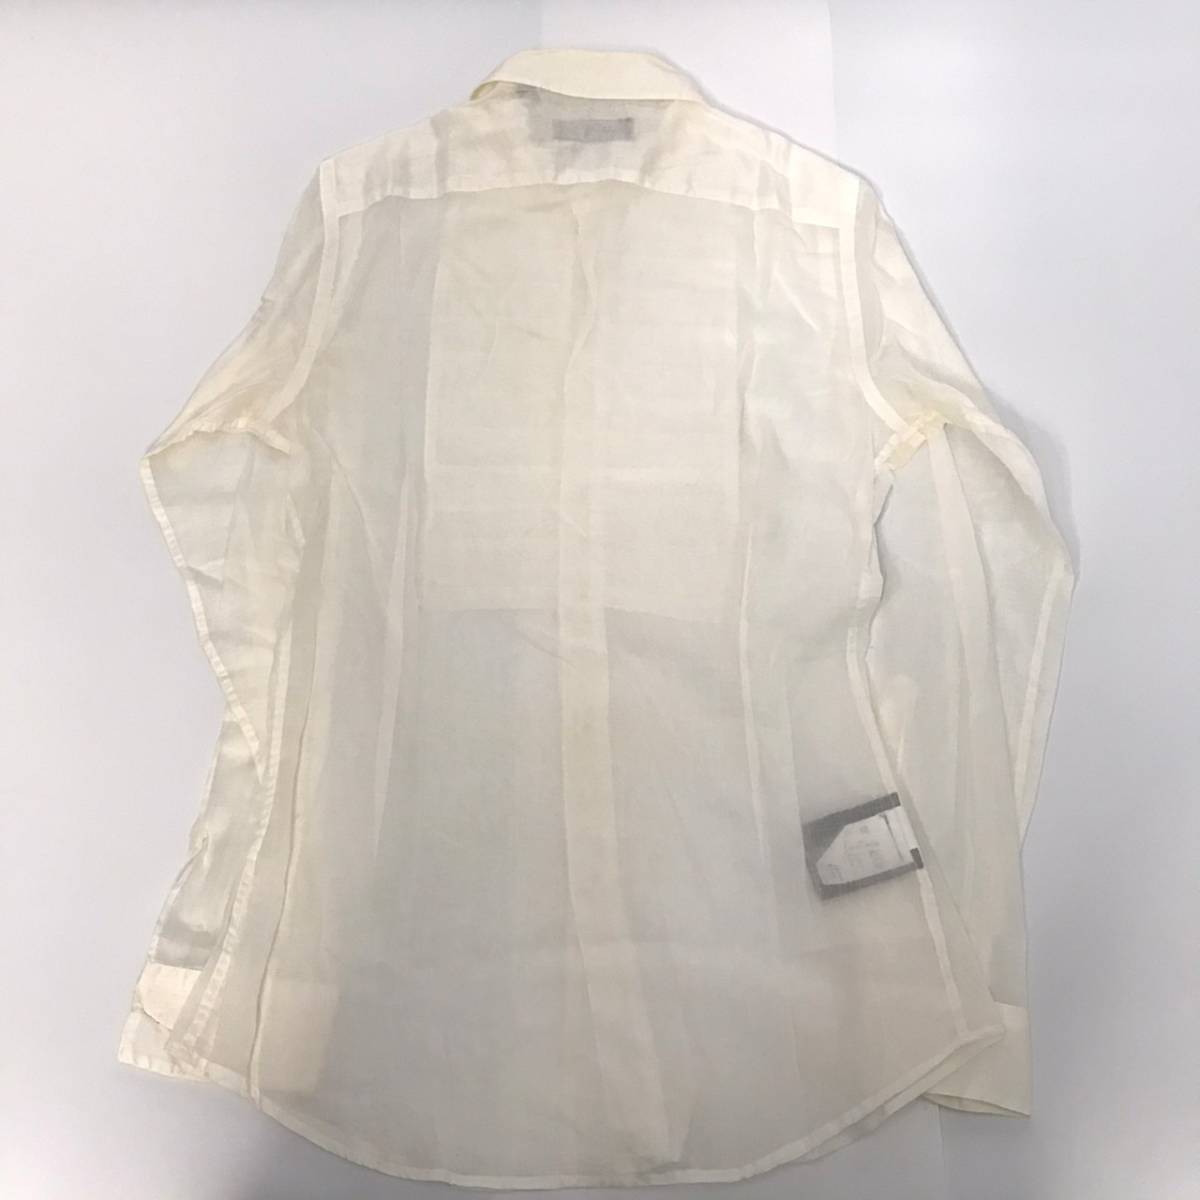 KJ1017-4-3 BURBERRY Burberry рубашка белый мужской размер 37 14 1/2 ширина 47cm ширина плеча 39cm длина 72cm 60 размер 